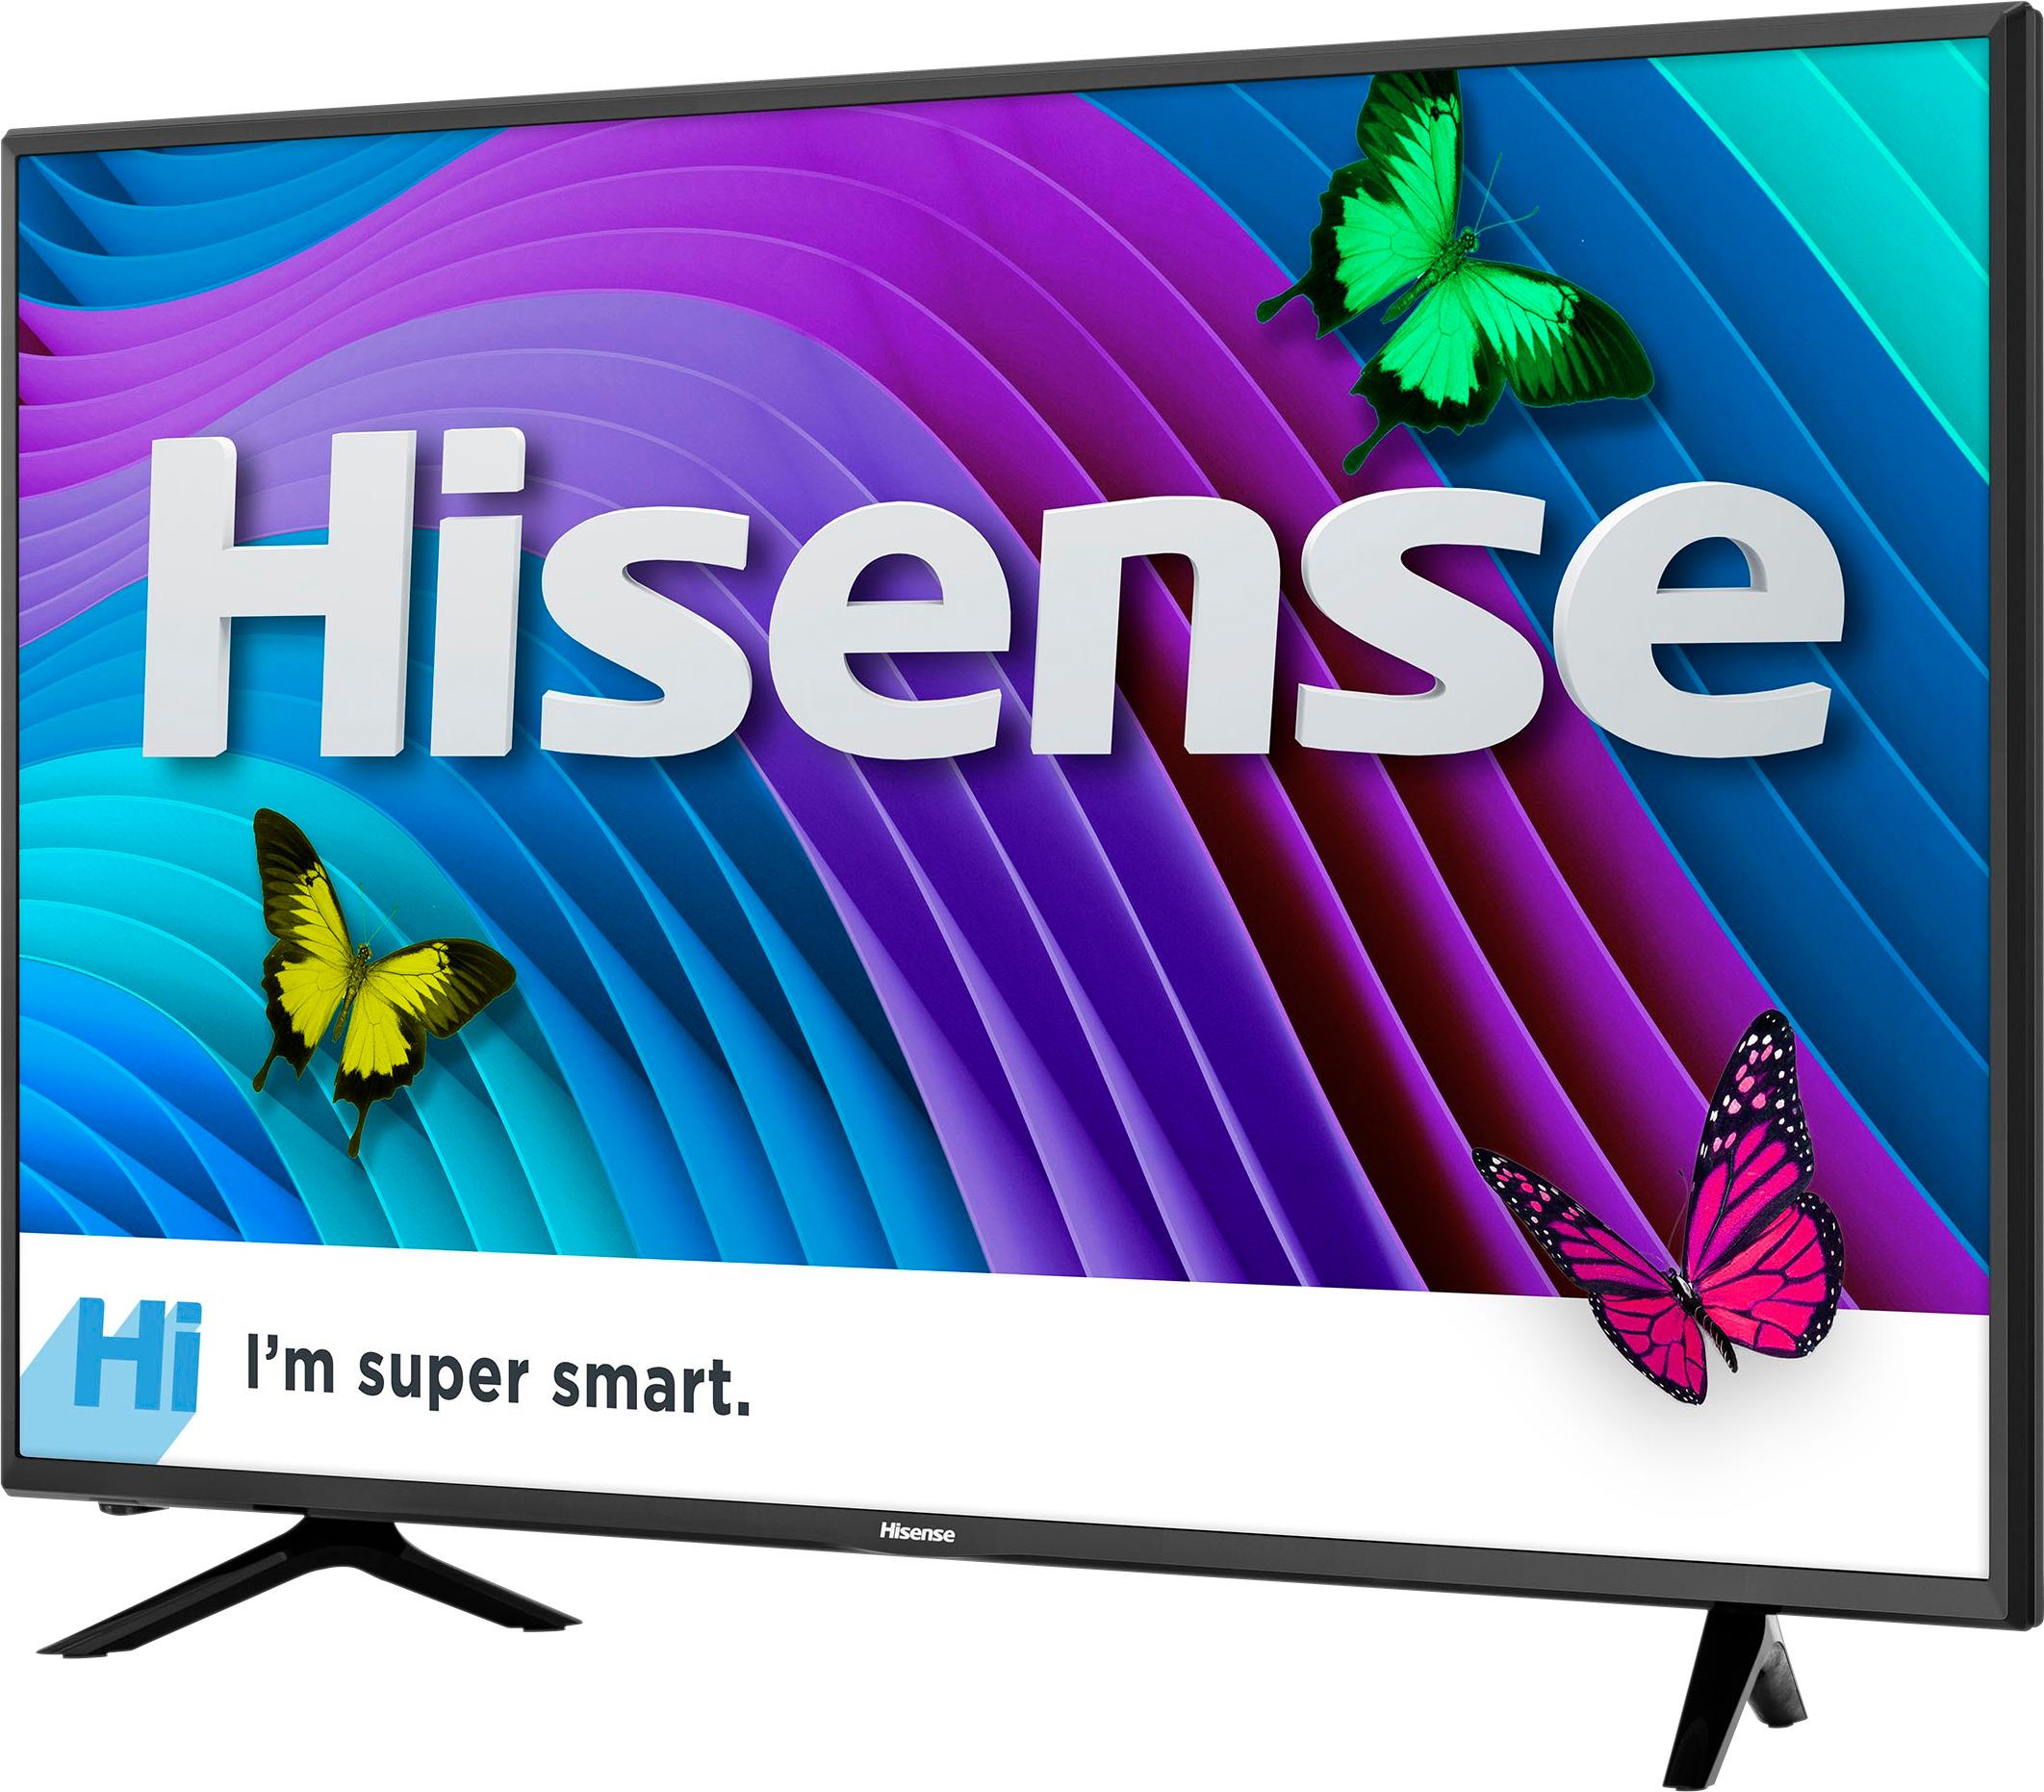 Hisense 50 Class R6G Series LED 4K UHD Smart Roku TV 50R6G - Best Buy